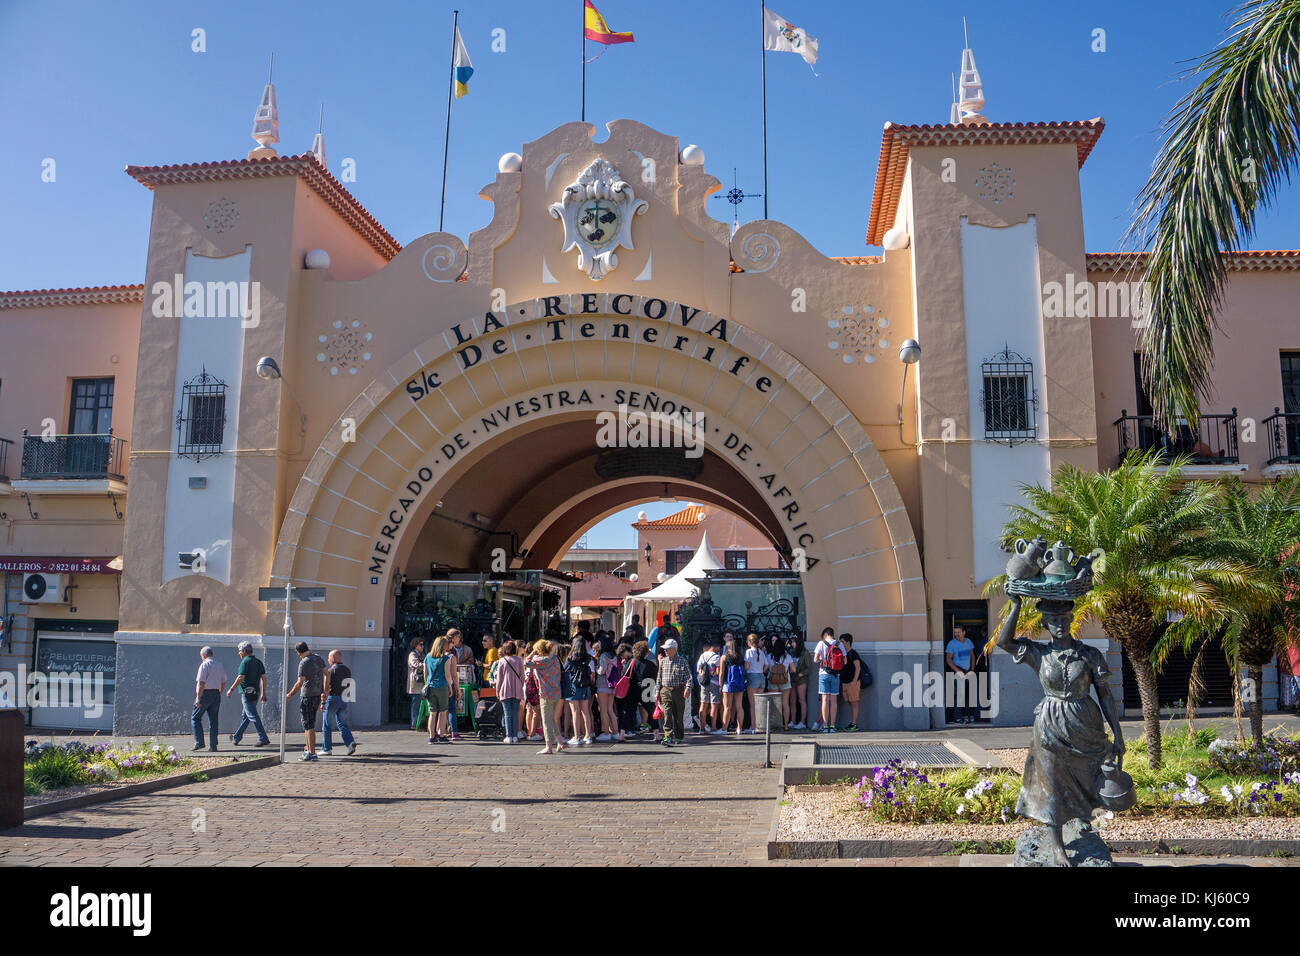 Entrée de mercado Nuestra Senora de l'Afrique, marché de la ville de santa cruz de tenerife, Tenerife, îles canaries, espagne Banque D'Images